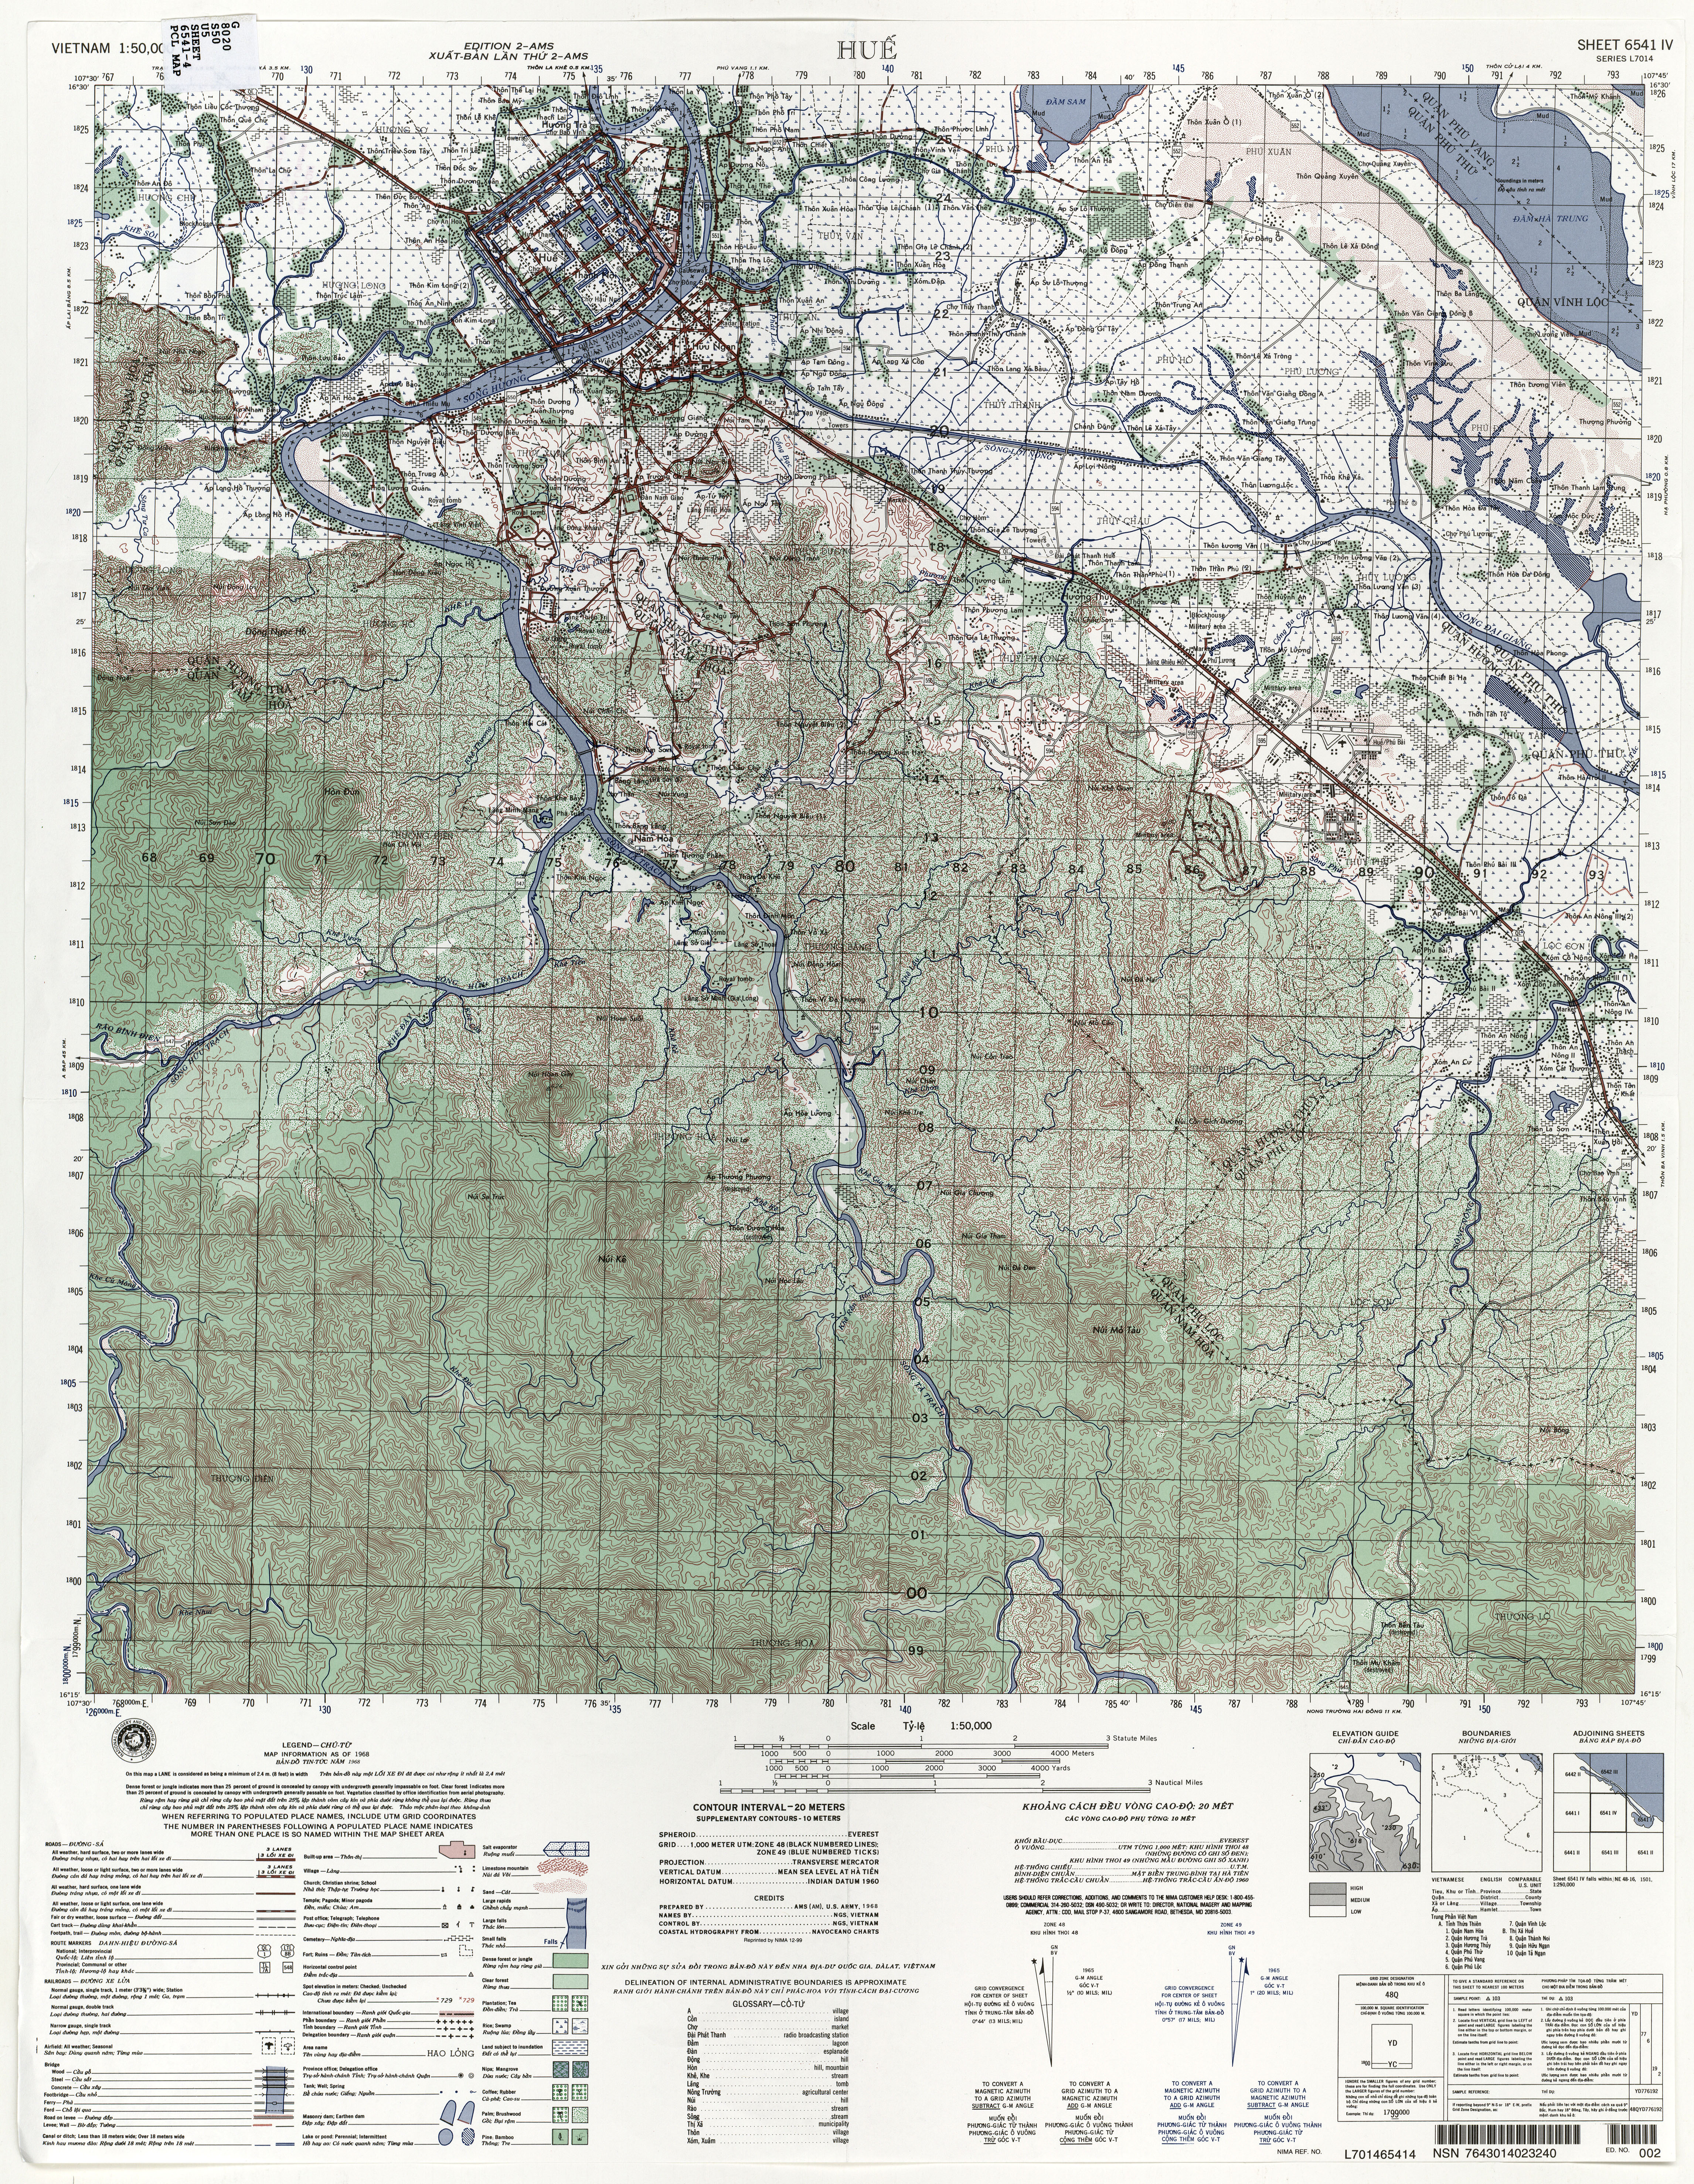 Vietnam Topographic Maps Perry Castaneda Map Collection Ut